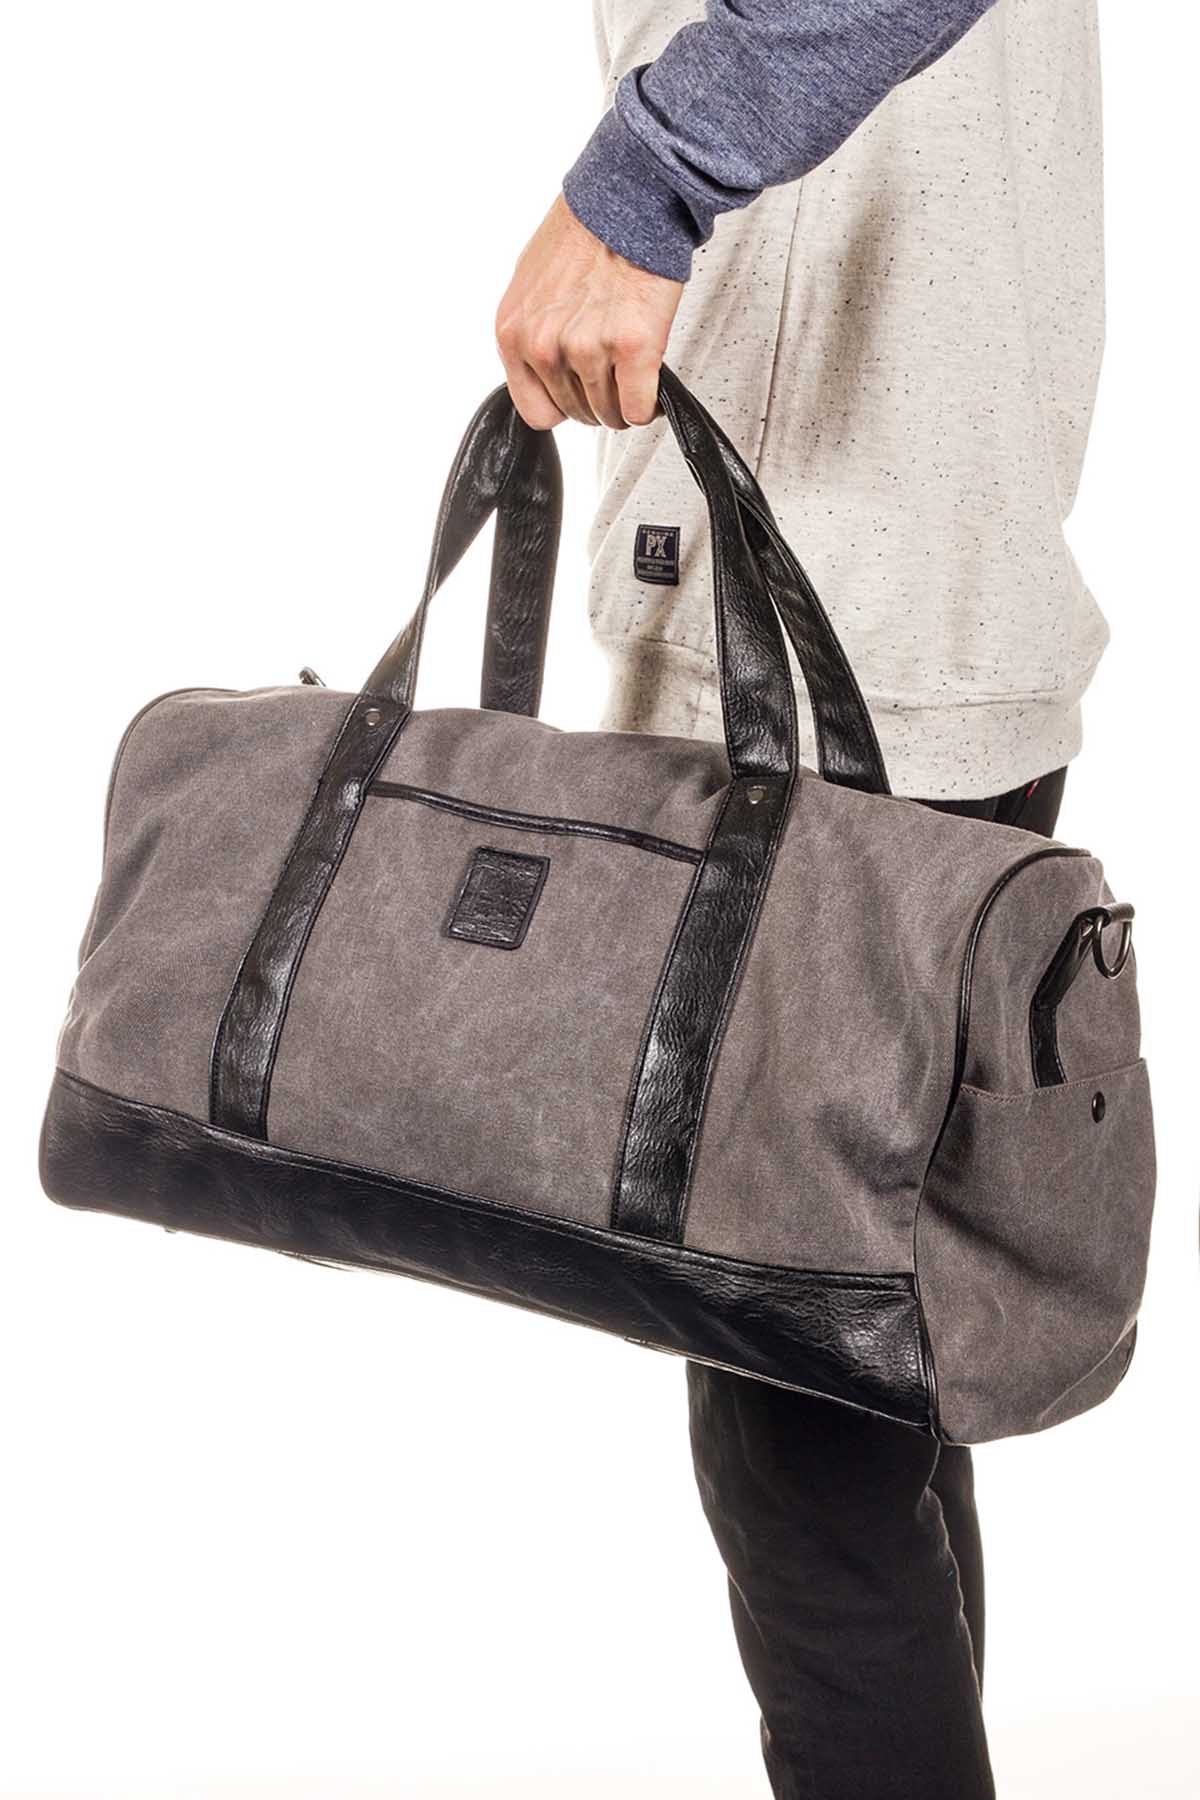 Premium Xpression Charcoal Simon Duffle Bag